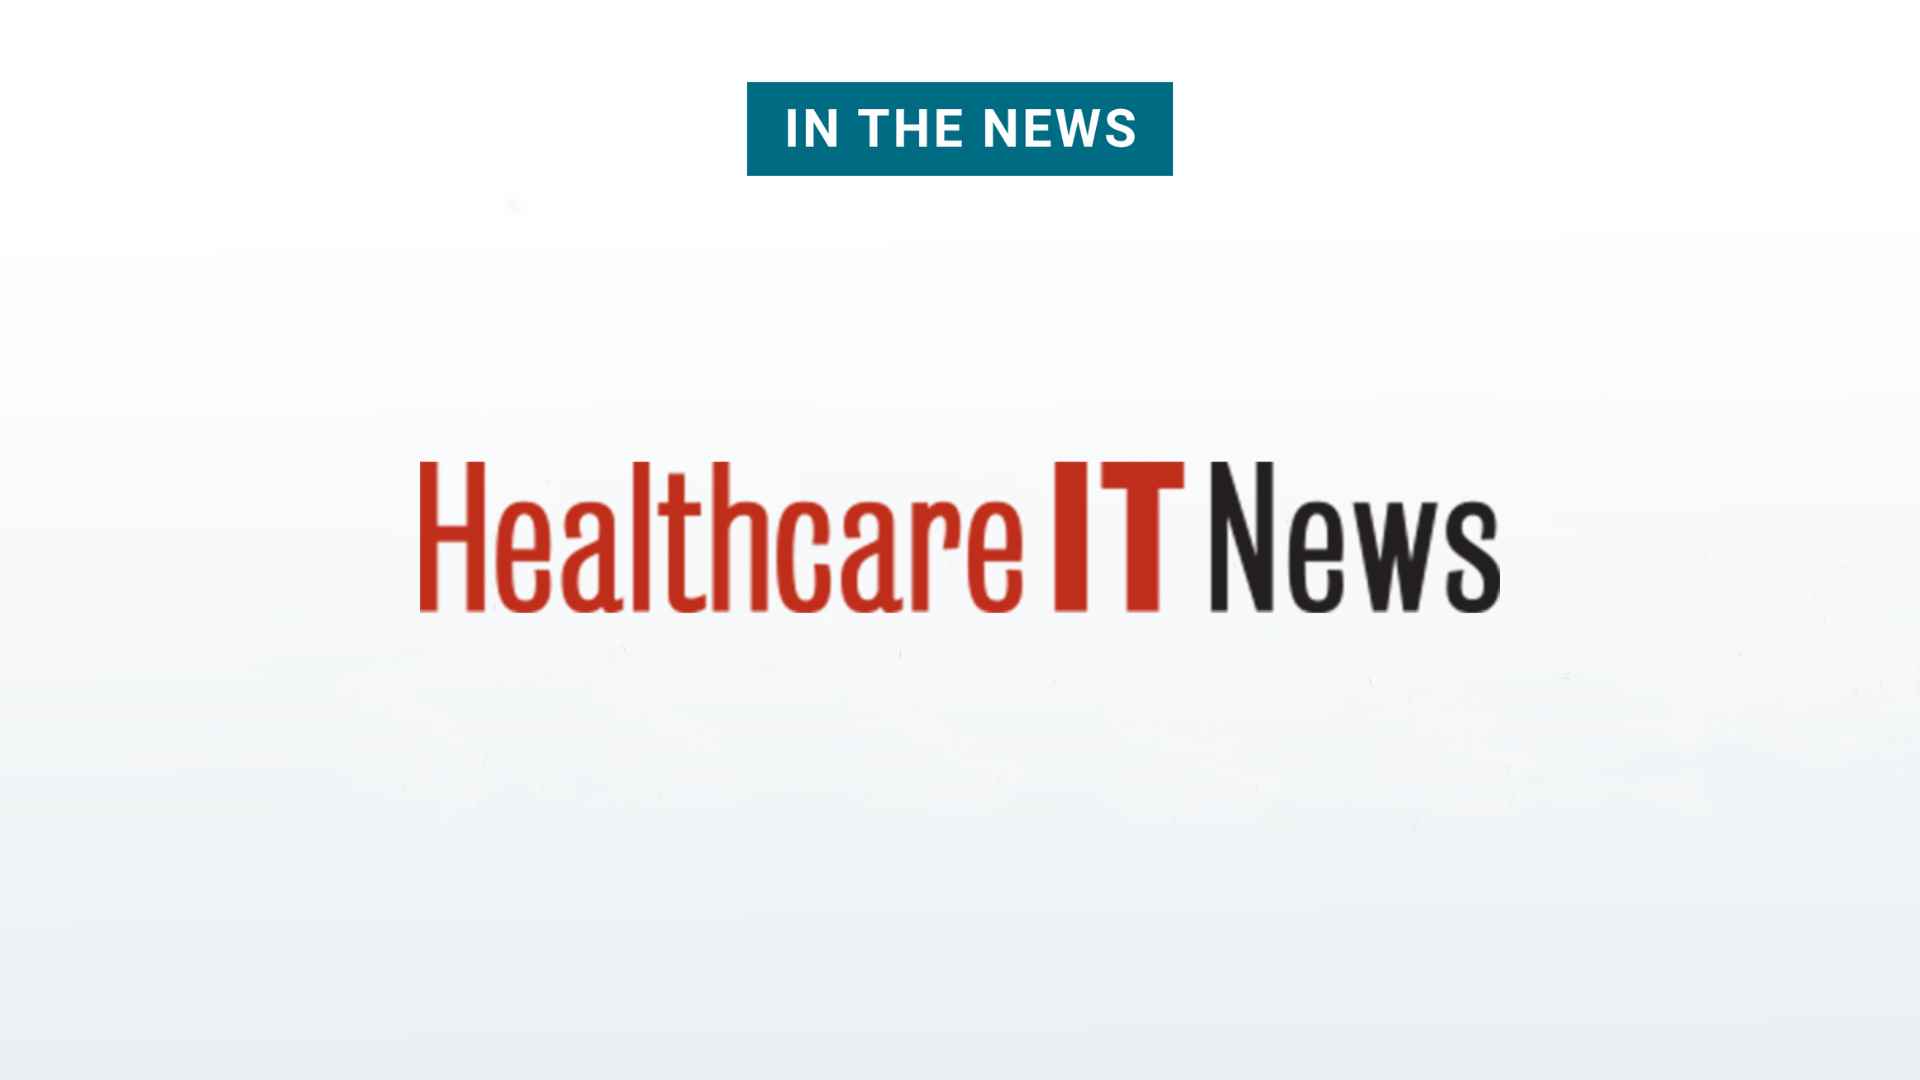 Healthcare IT News publication logo